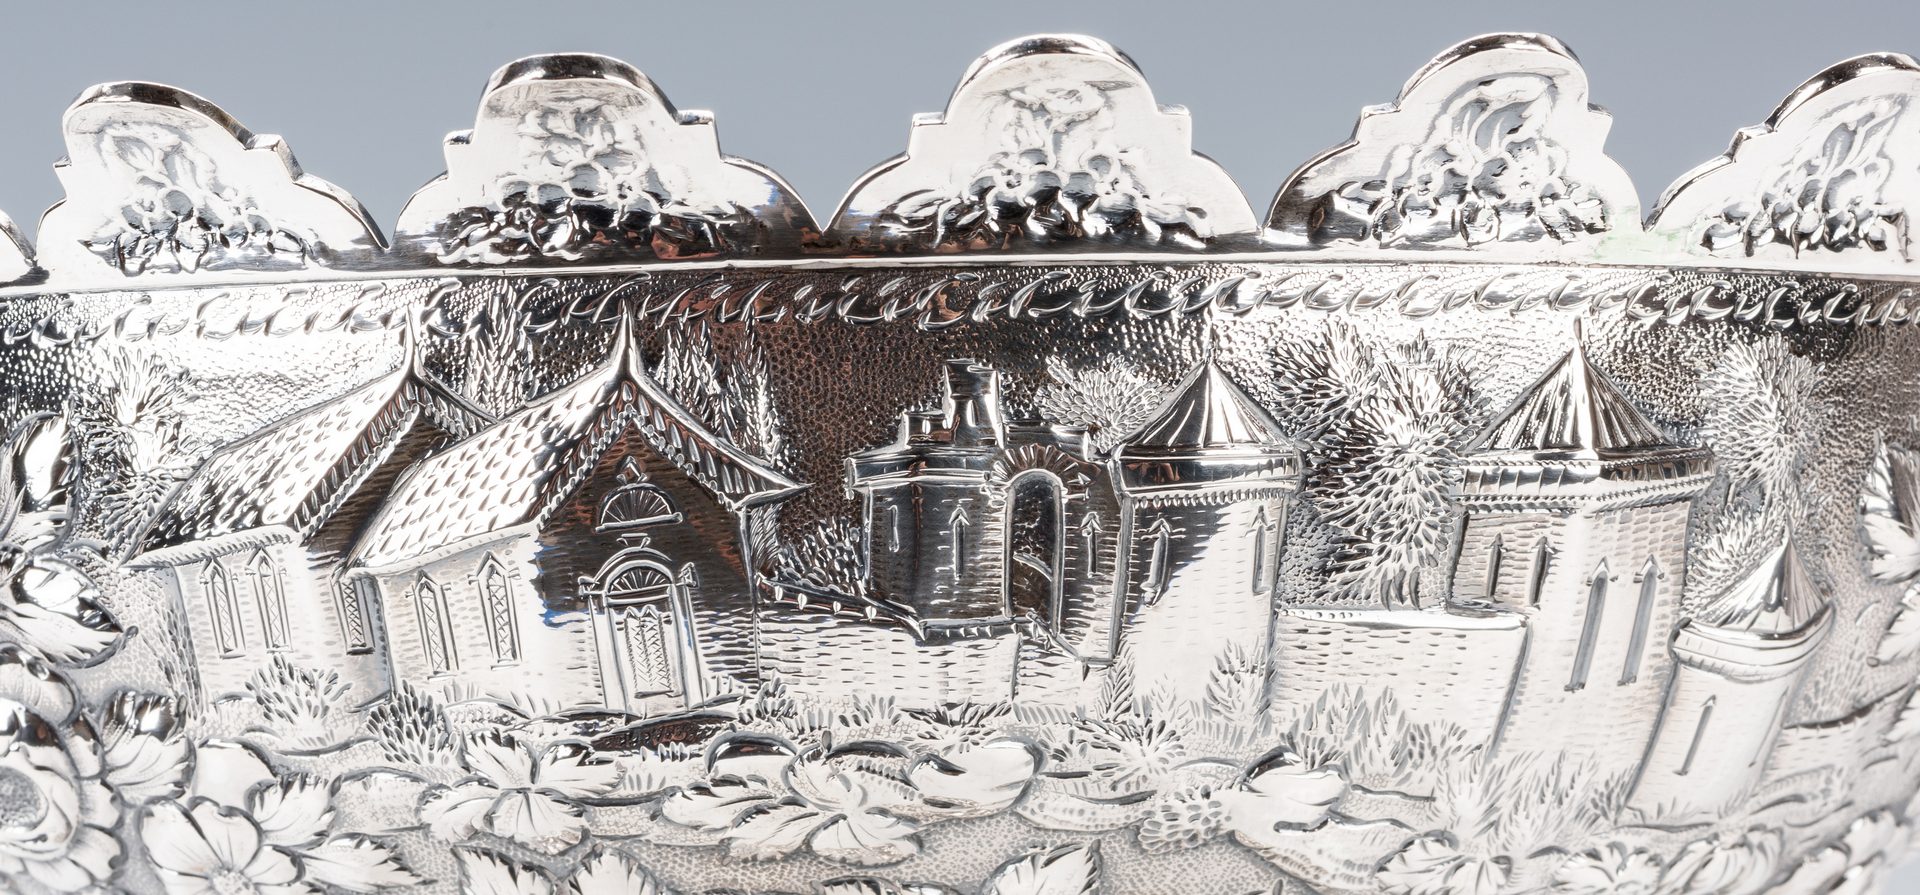 Lot 59: Baltimore Coin Silver Repousse Monteith Bowl